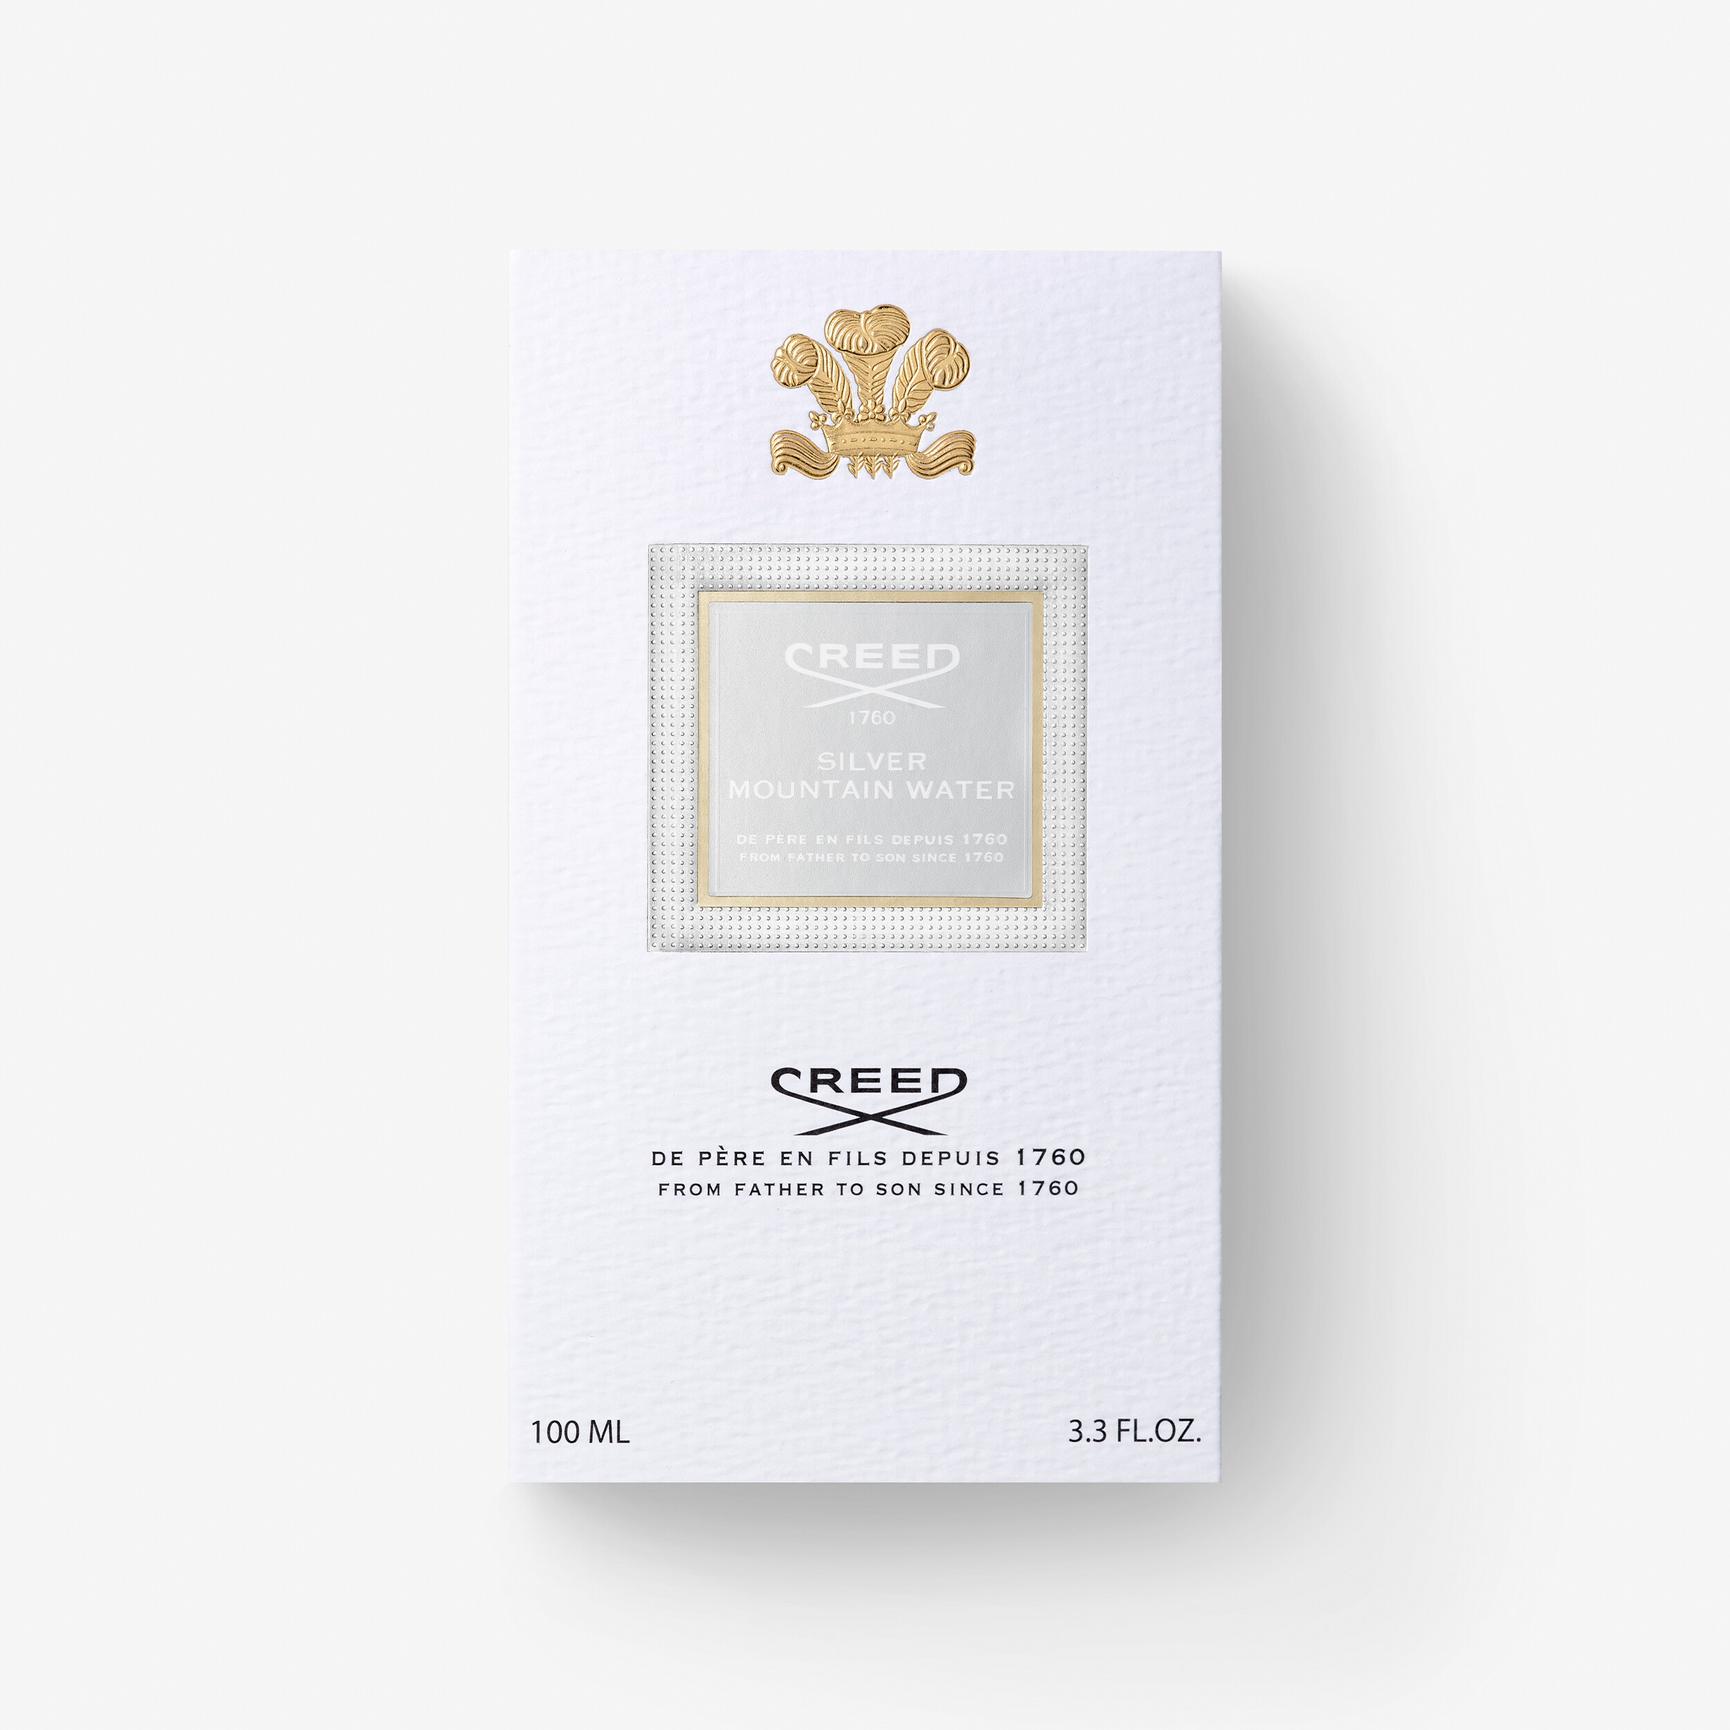 Creed Silver Mountain Water Eau de Parfum (Unisex) - Perfume Planet 